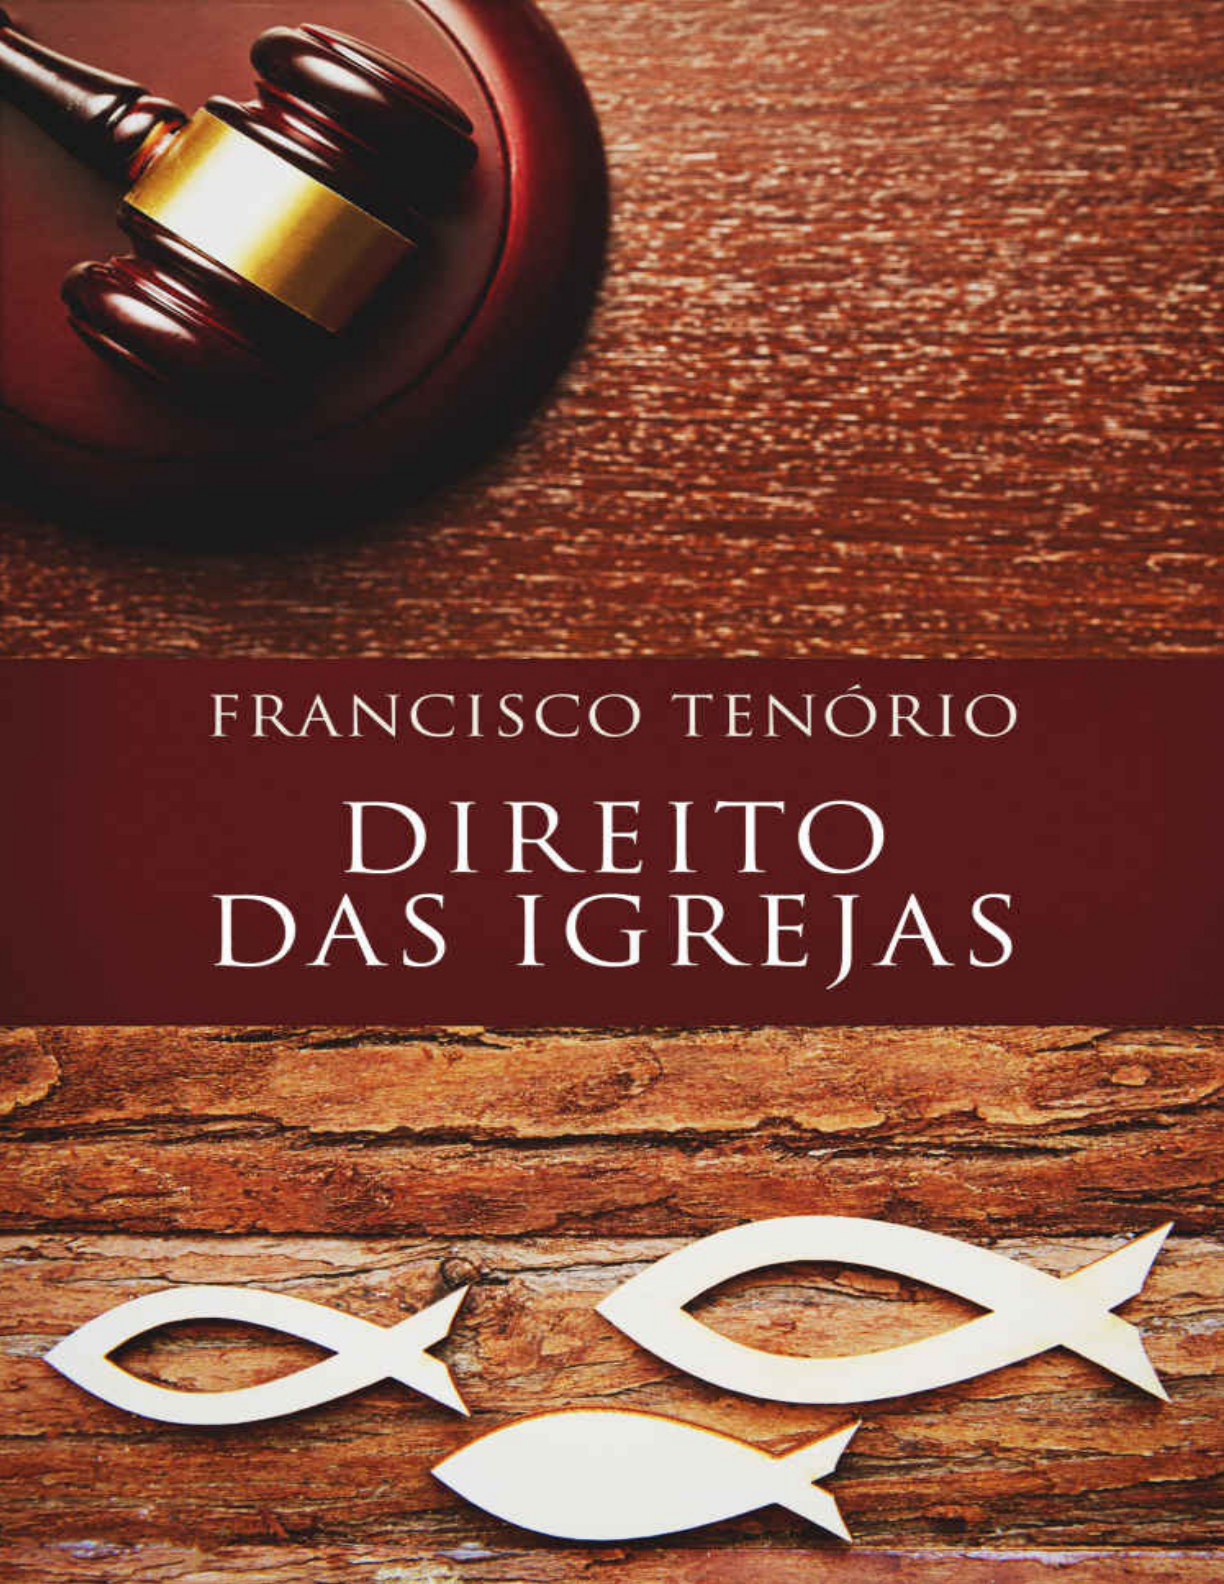 Direito das igrejas - Francisco Tenorio - Direito Civil III